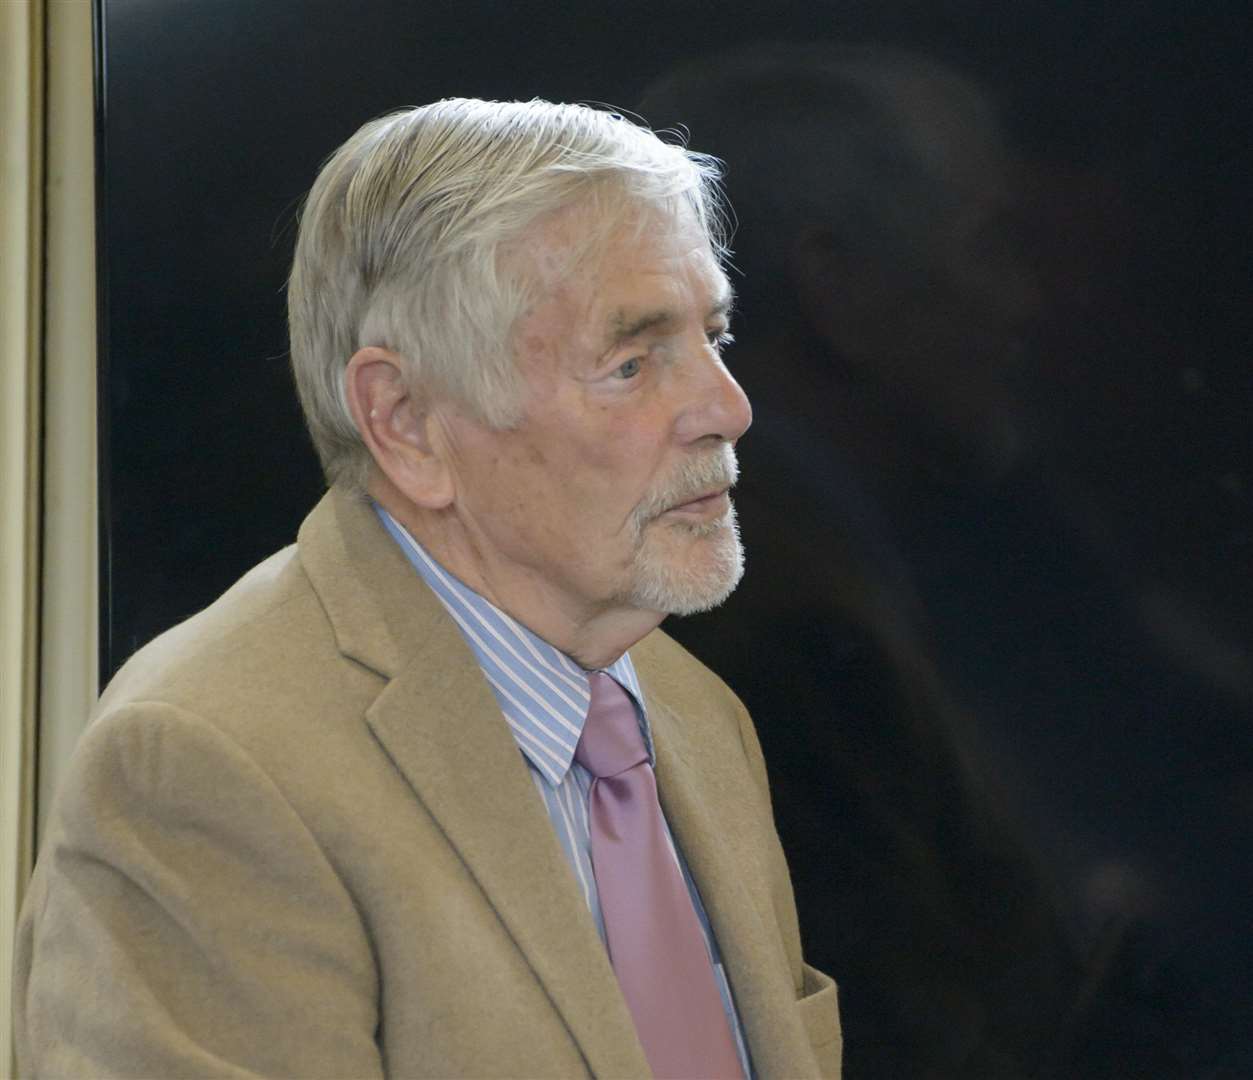 Cllr Bob Hinder, chairman of Boxley Parish Council